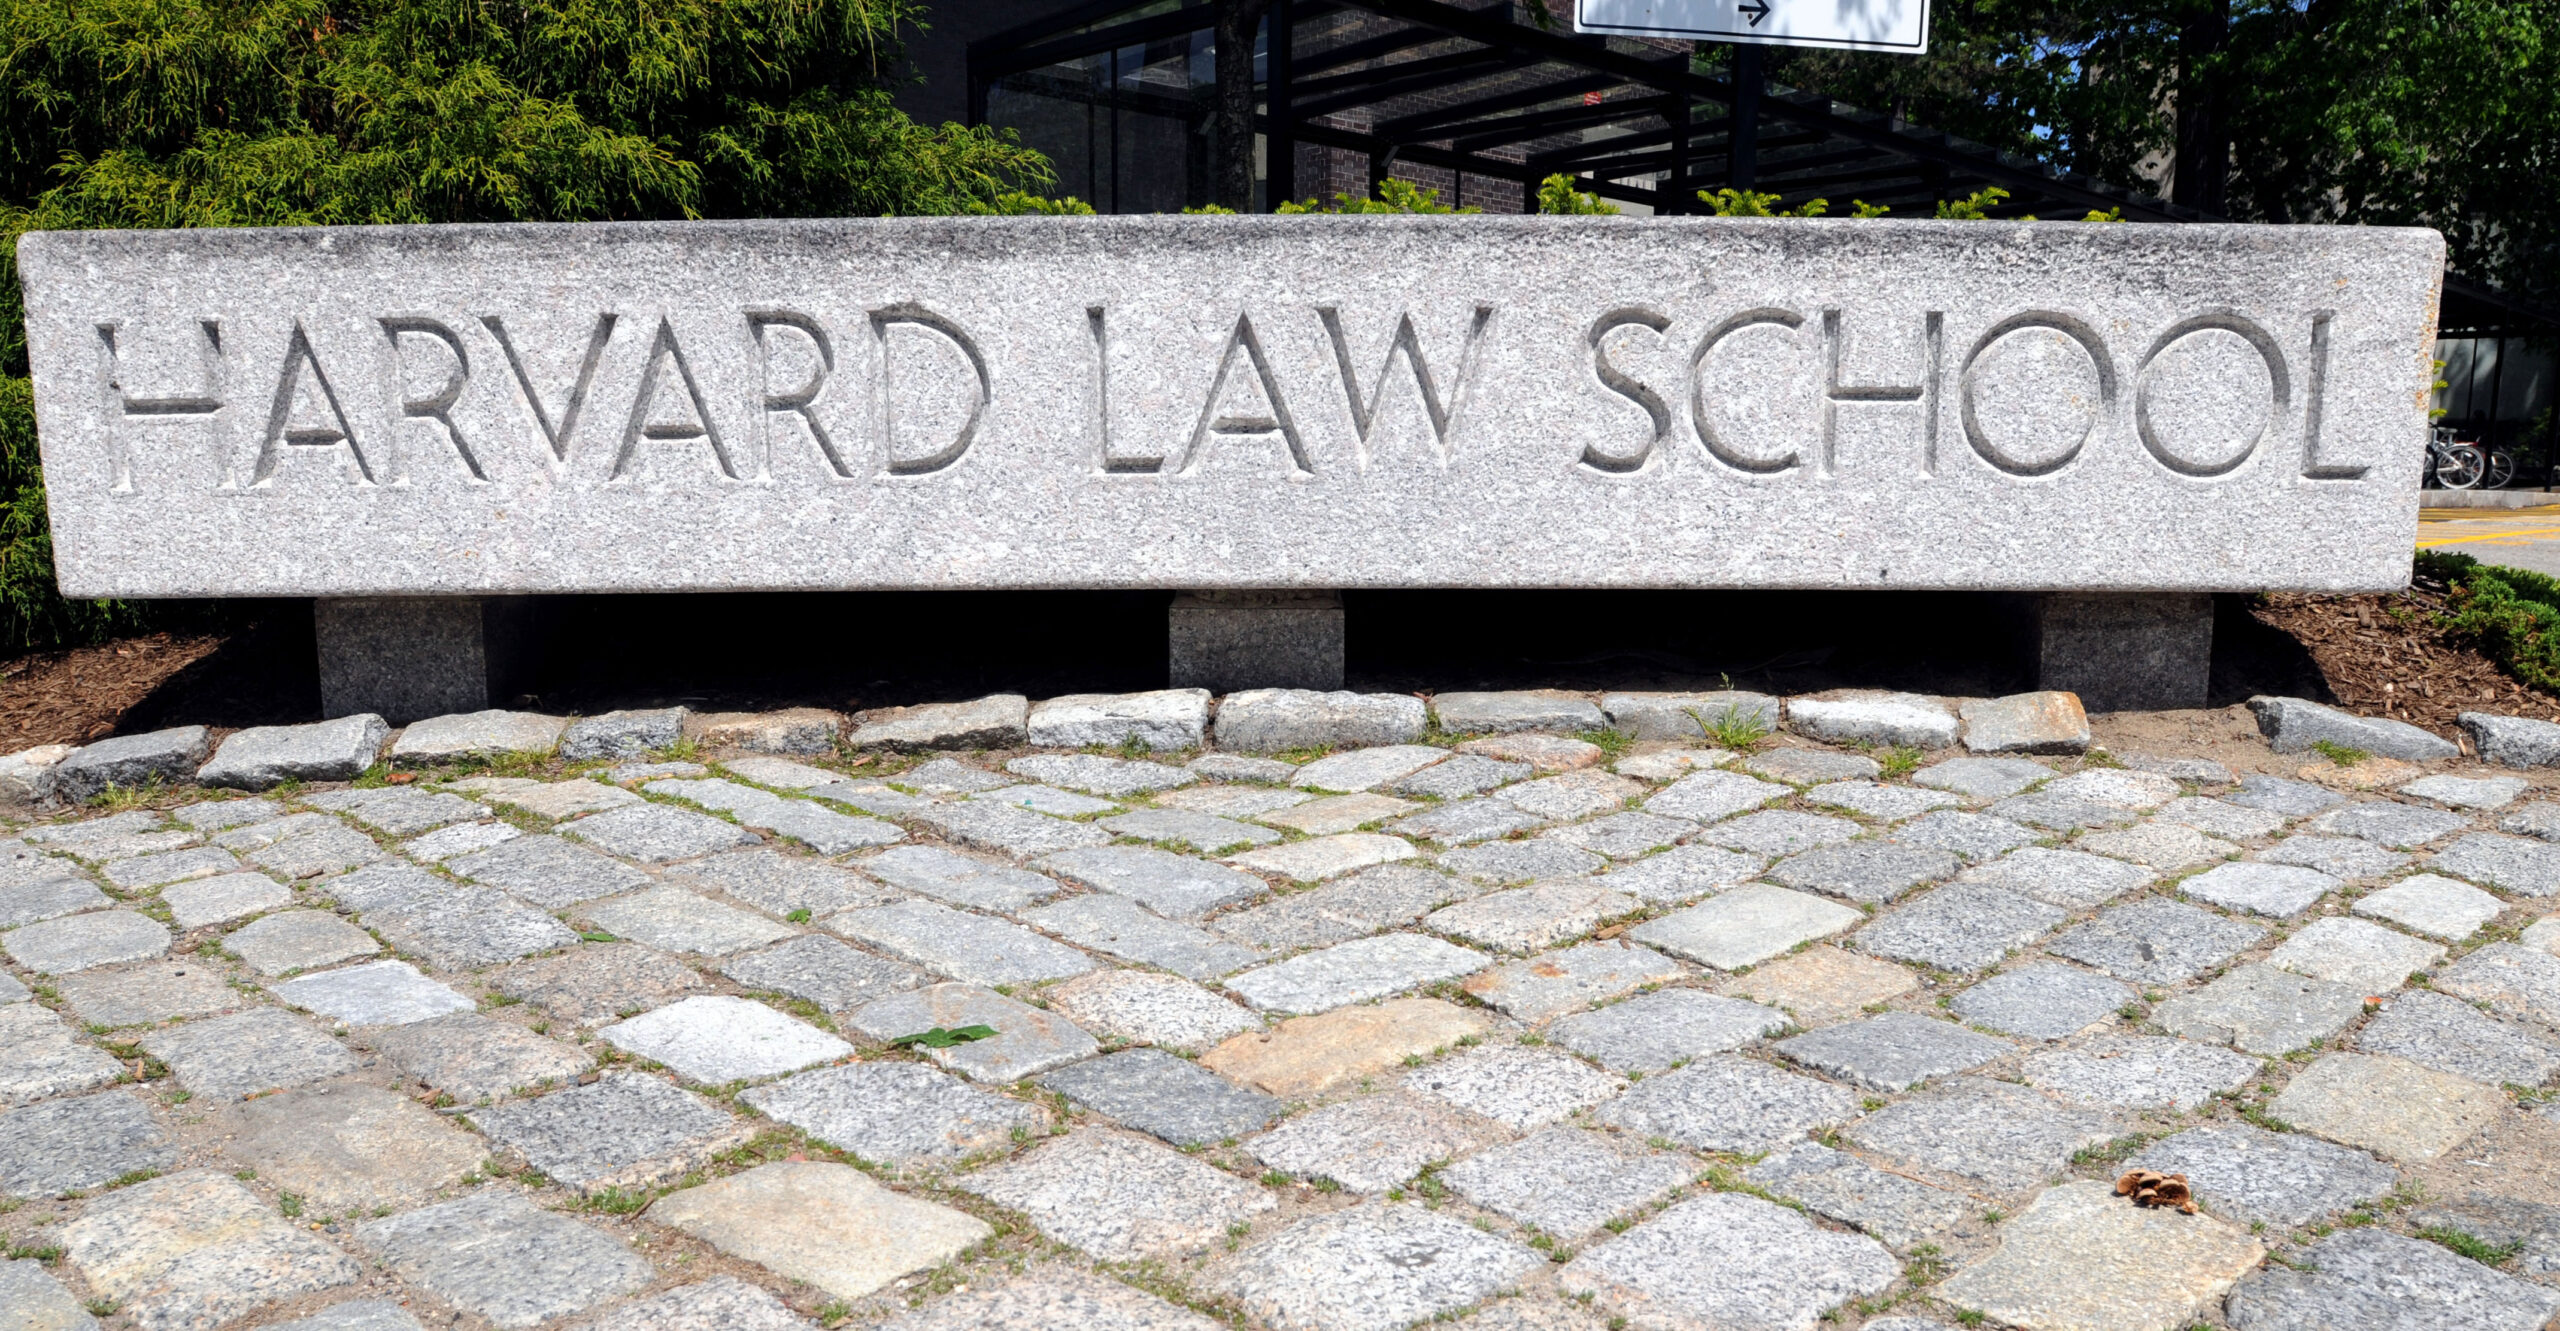 Will the US ban TikTok? - Harvard Law School